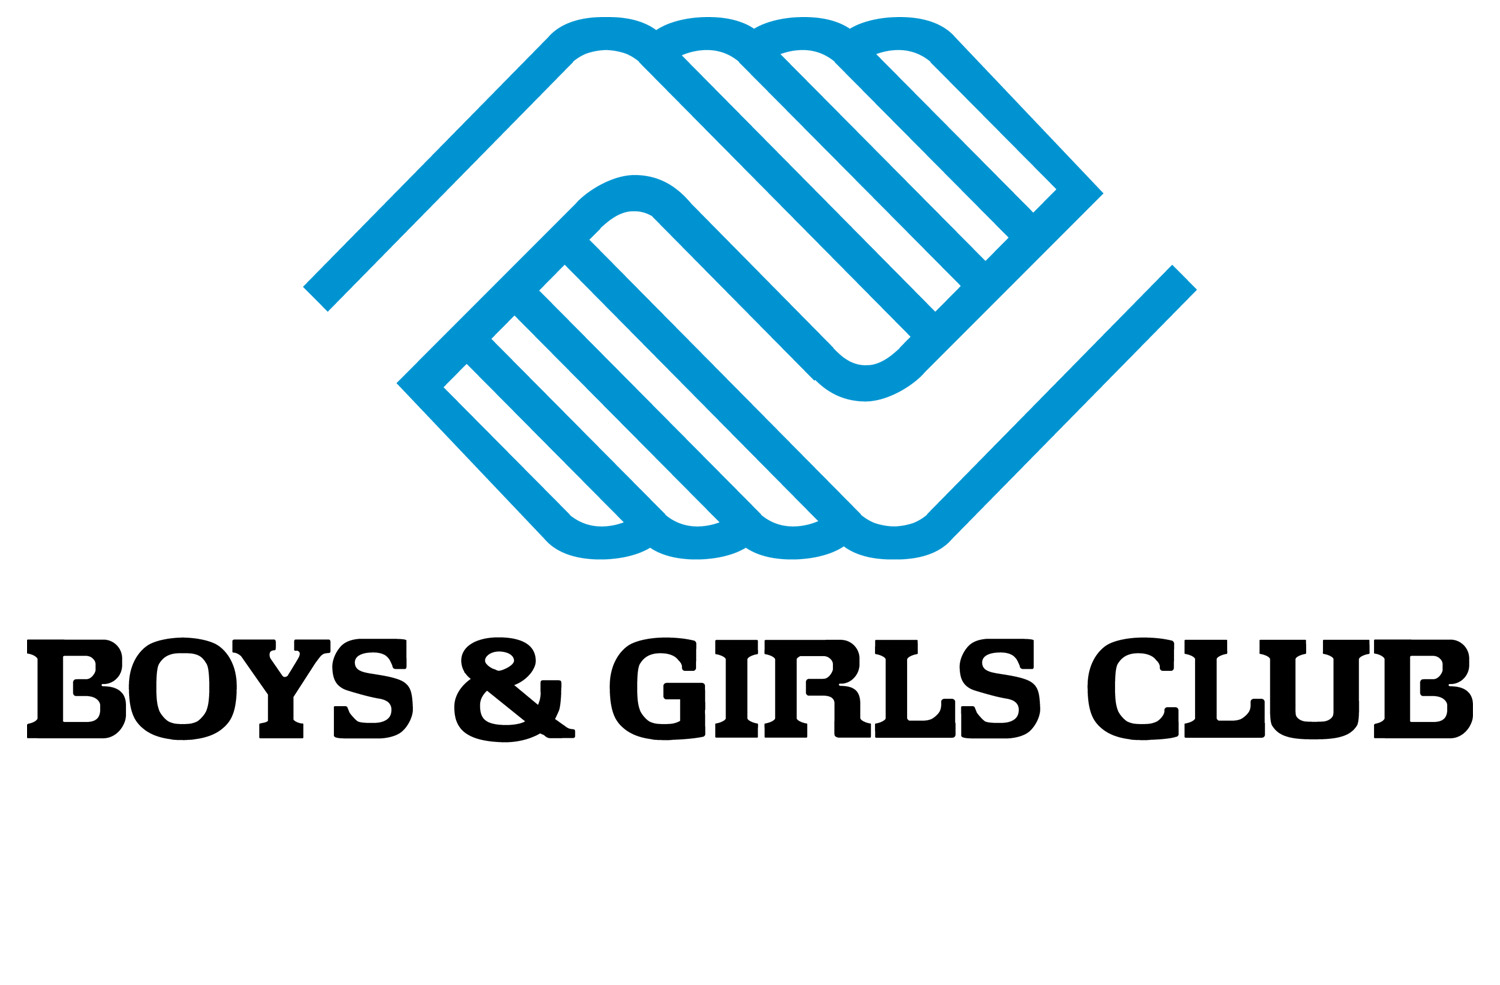 Boys & Girls Club “Benefit Bash” at Savannah Saturday night